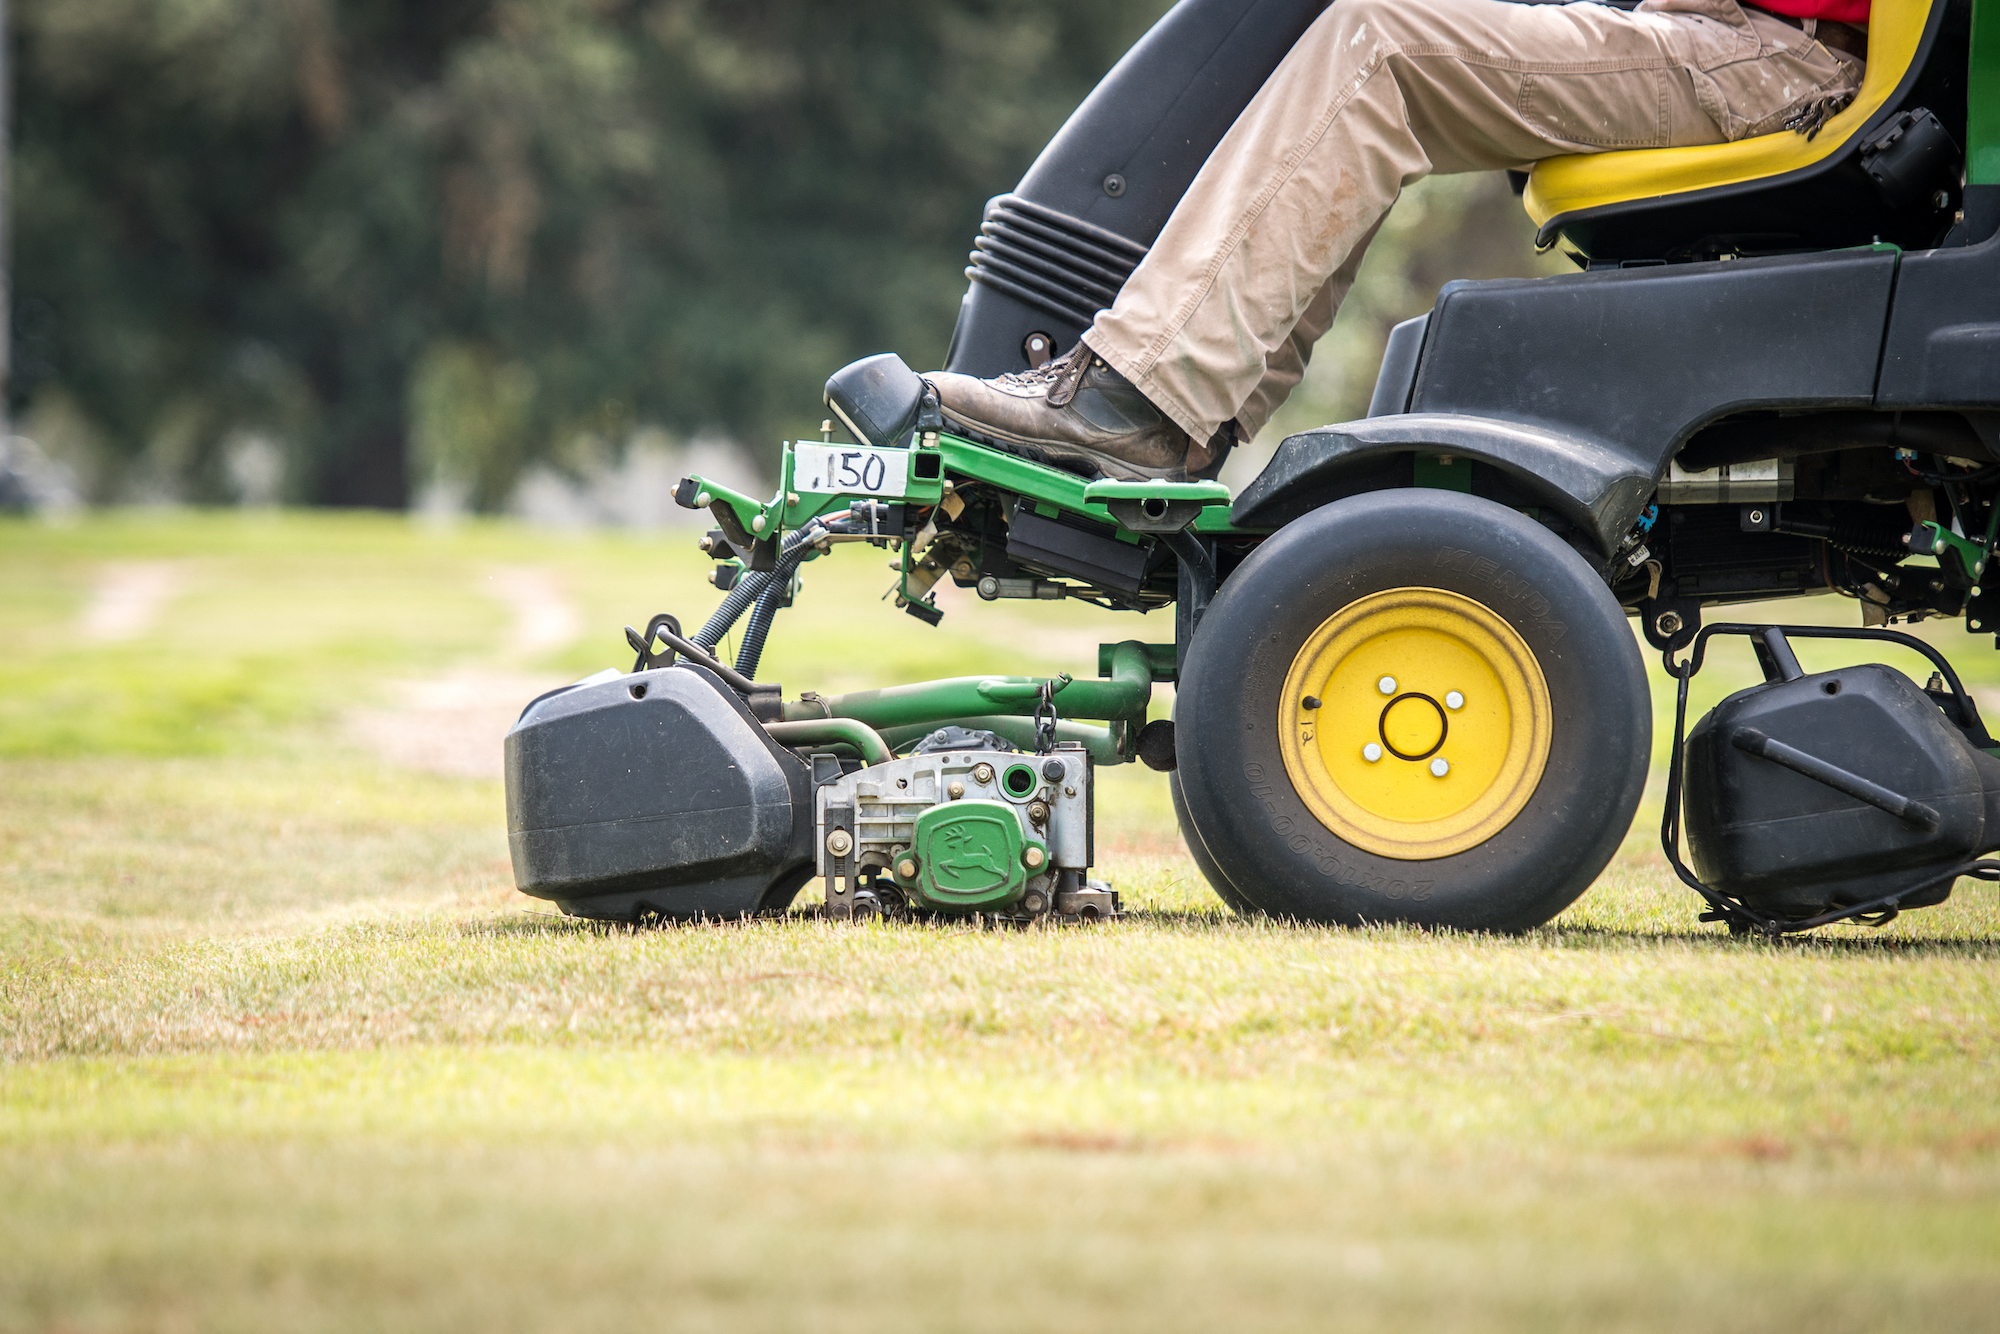 A man uses a riding lawn mower to cut turf grass in Tifton, Georgia